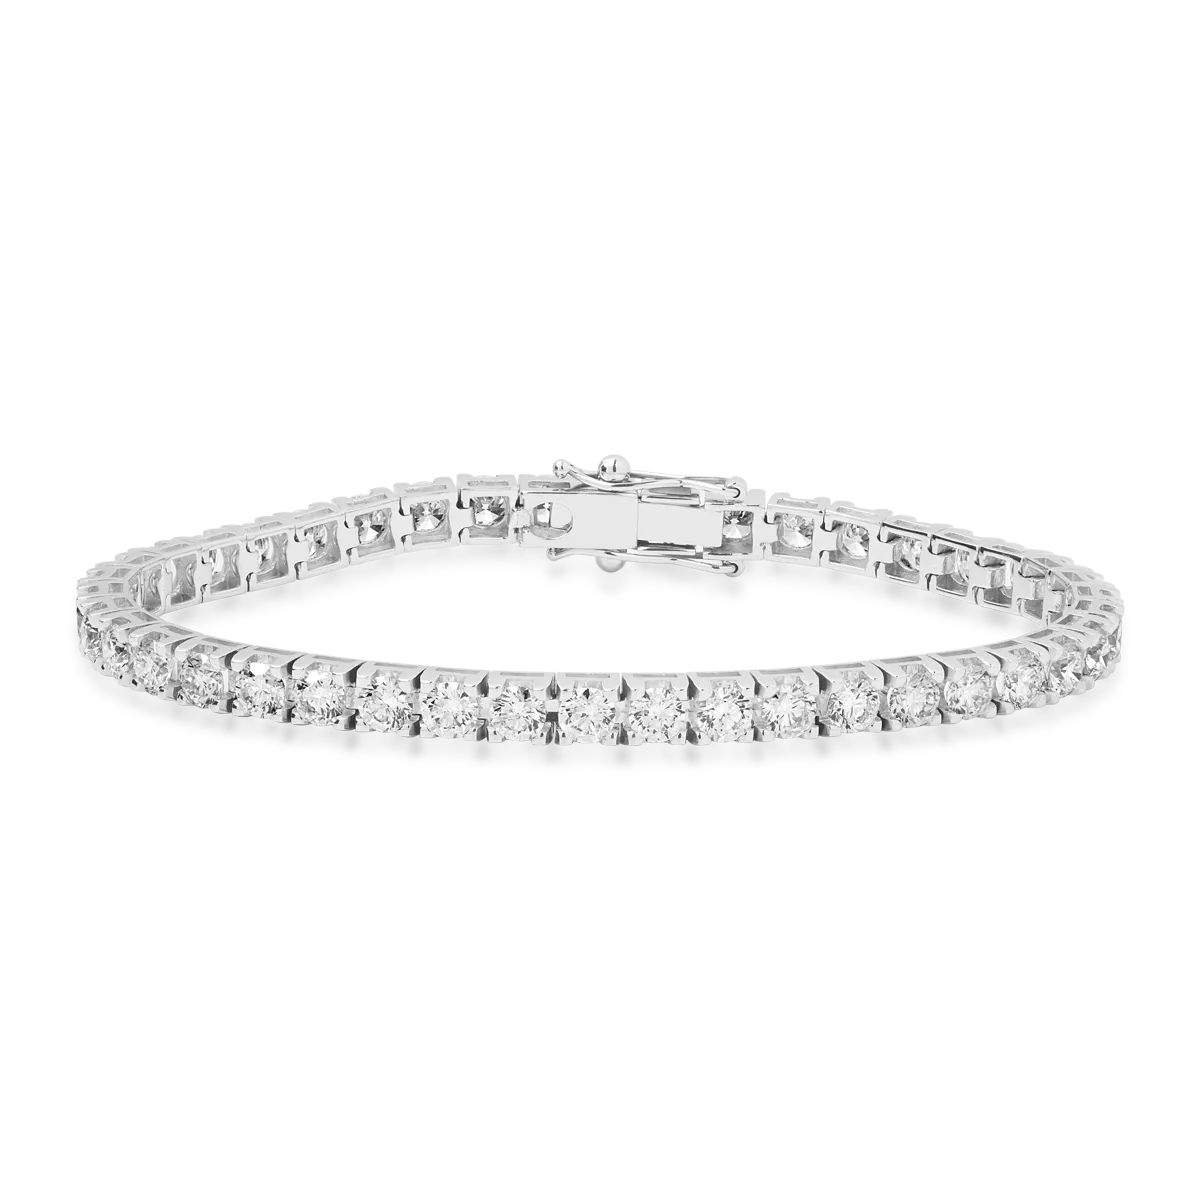 18K white gold tennis bracelet with 7ct diamonds